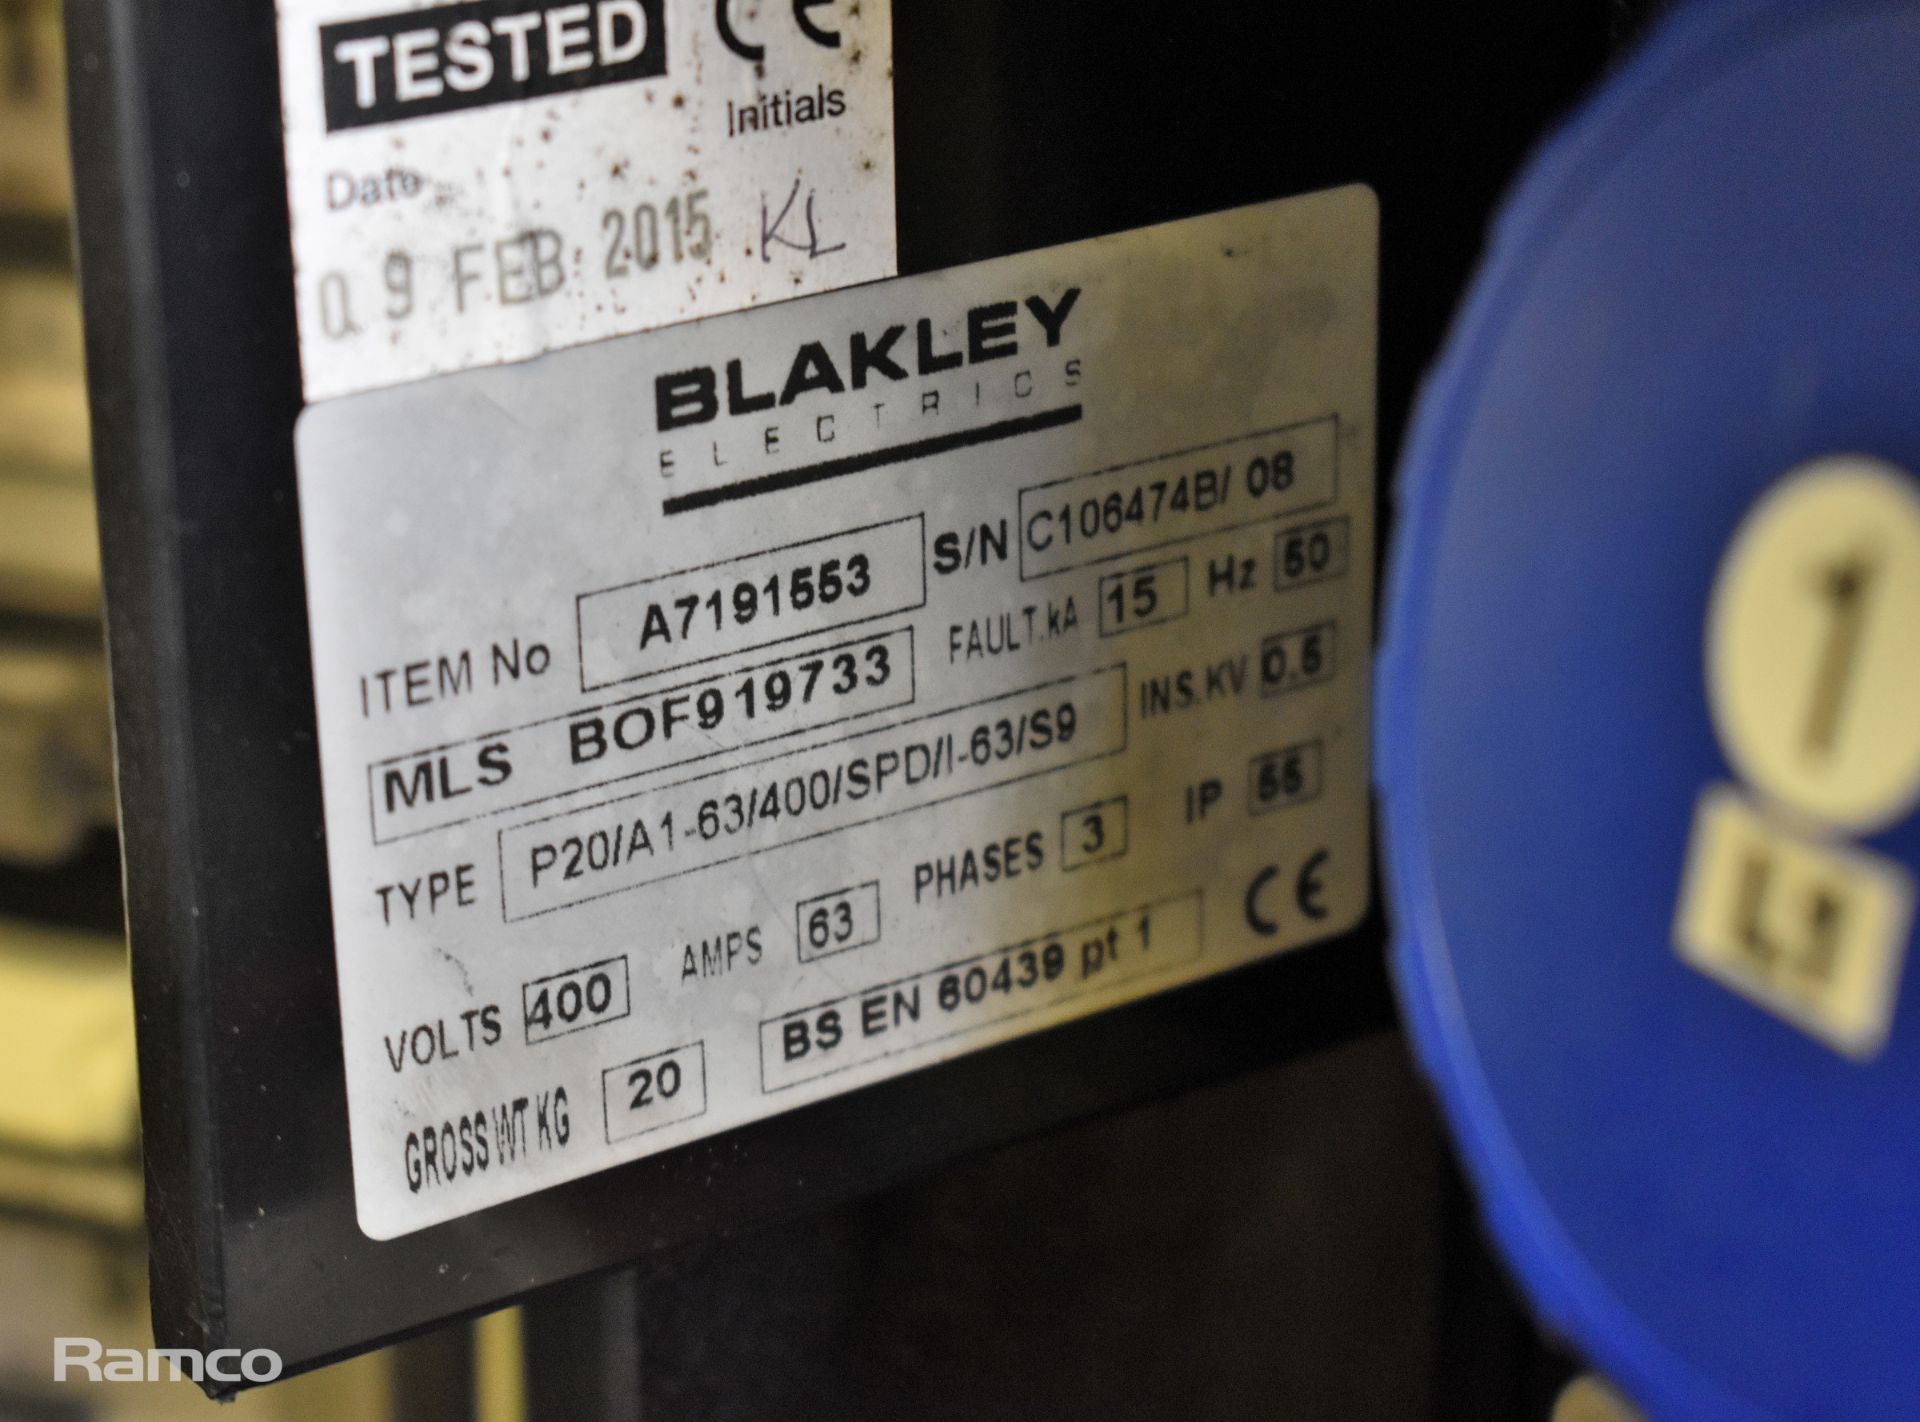 Blakley Electrics P20/A1-63/400/SPD/I-63/S9 - 9x 230V plugs, 1x 415V plug electric distribution box - Image 4 of 4